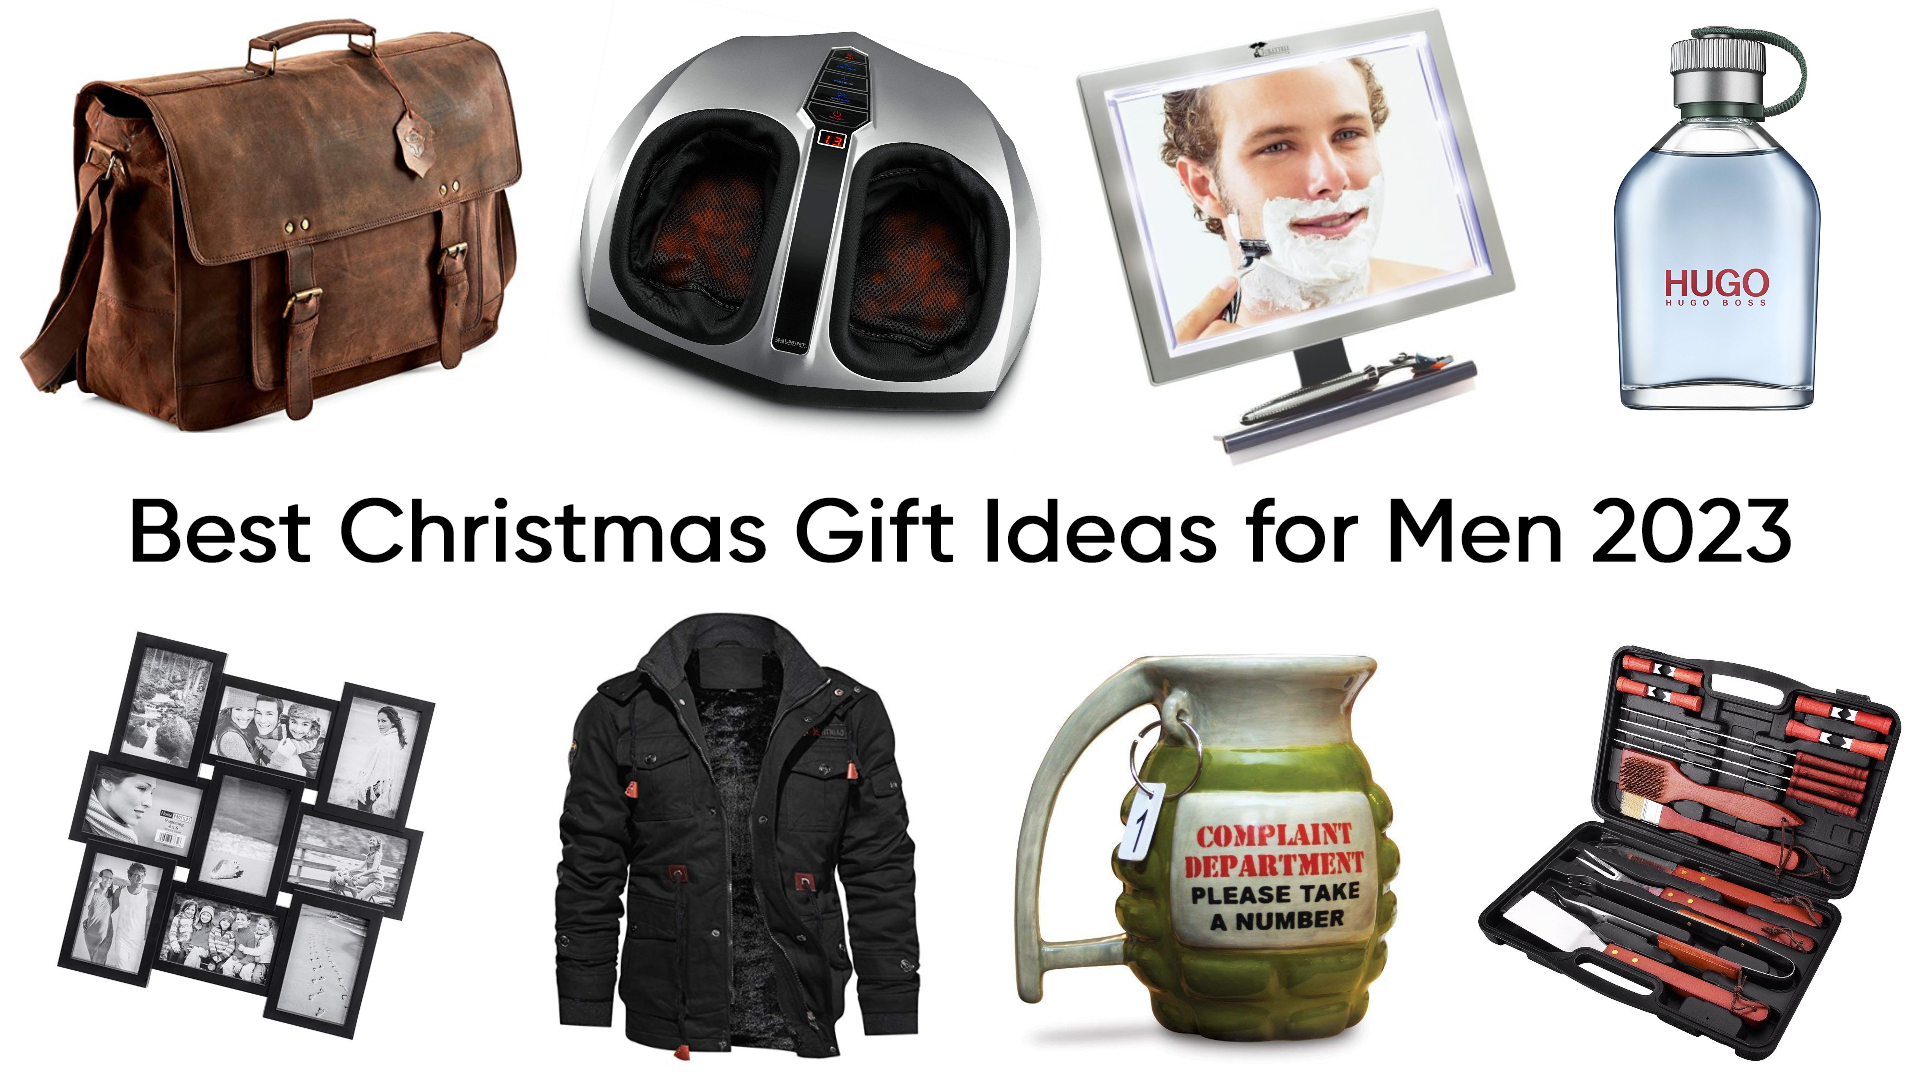 Best Christmas Gifts for Men 2023 - Top 10 CHristmas Gift ideas for Men 2023